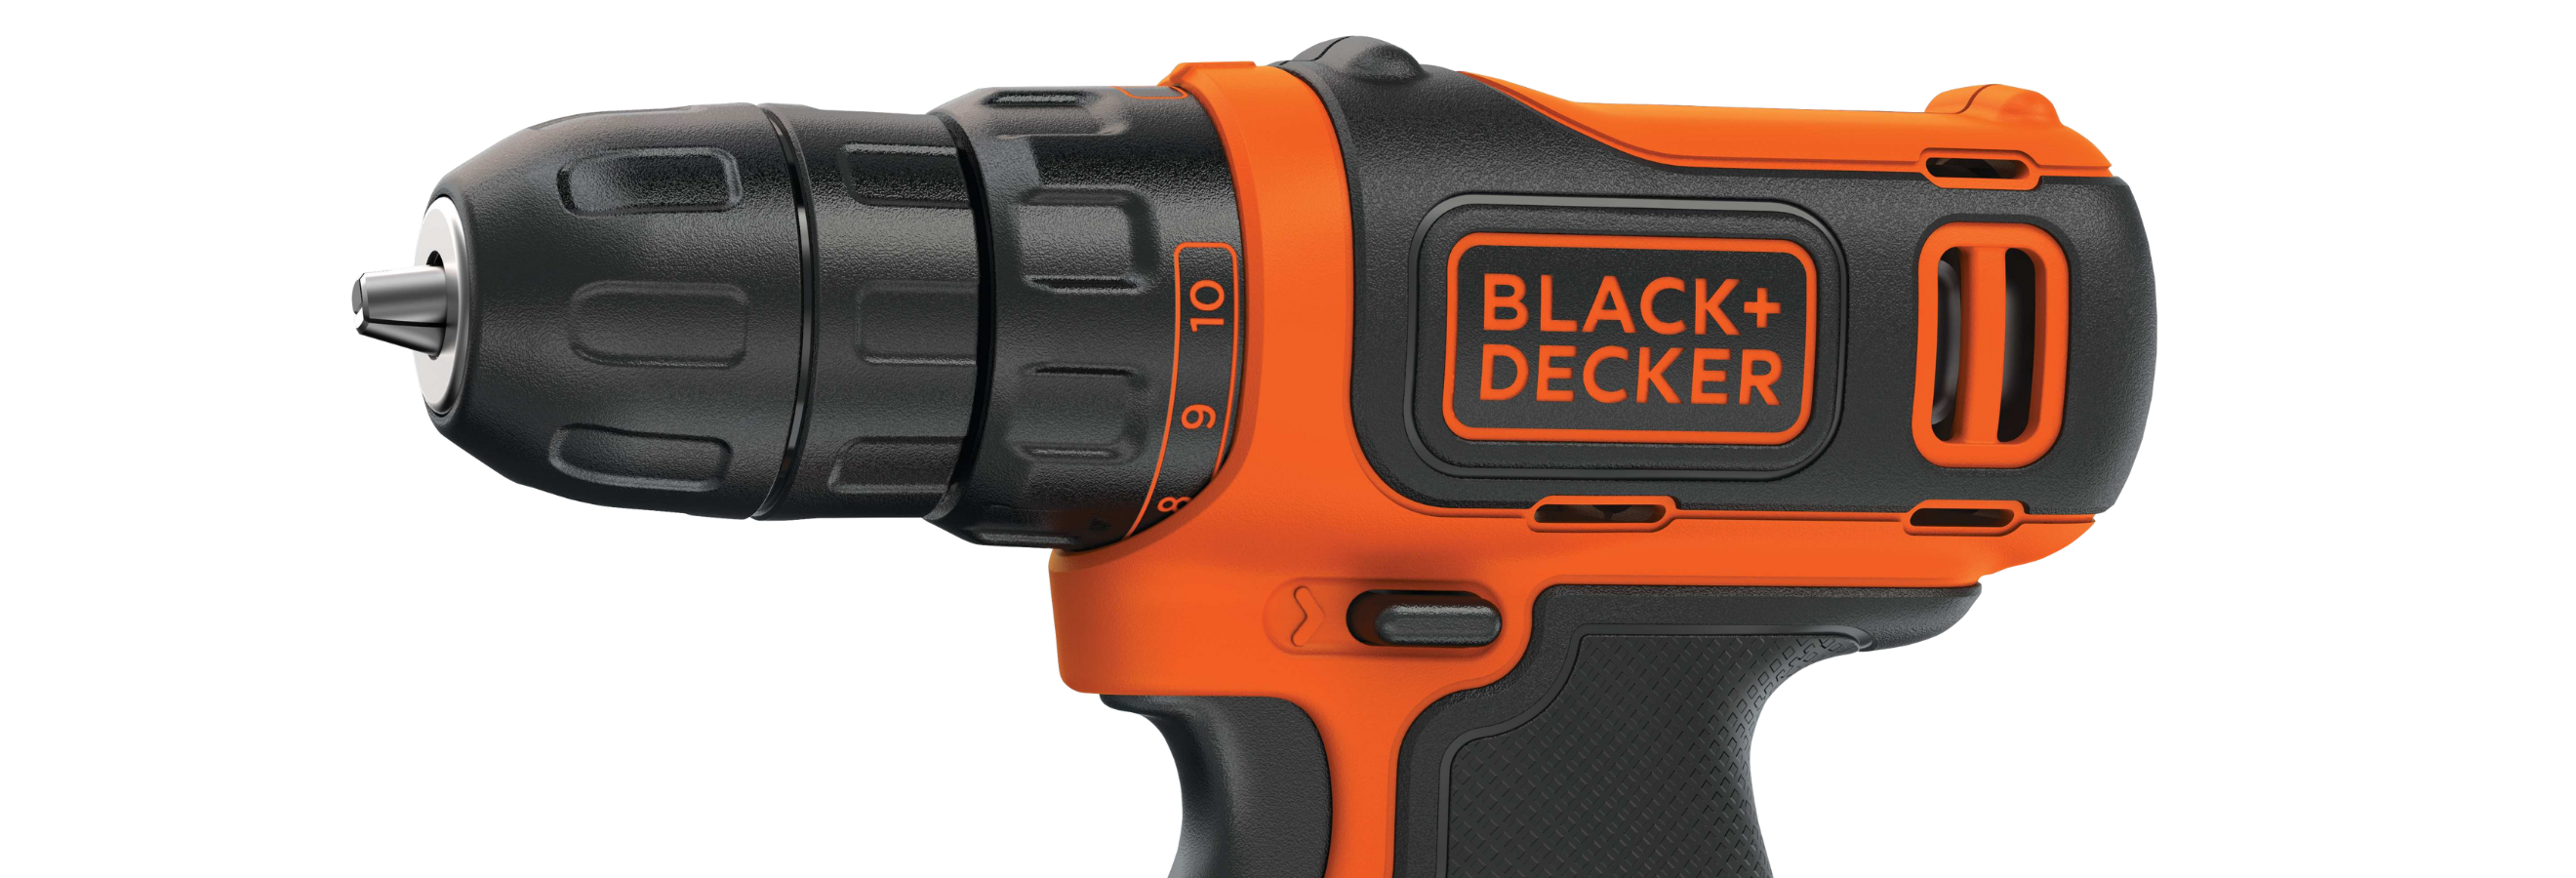 BLACK+DECKER 12V MAX Drill & Home Tool Kit, 60-Piece (BDCDD12PK)